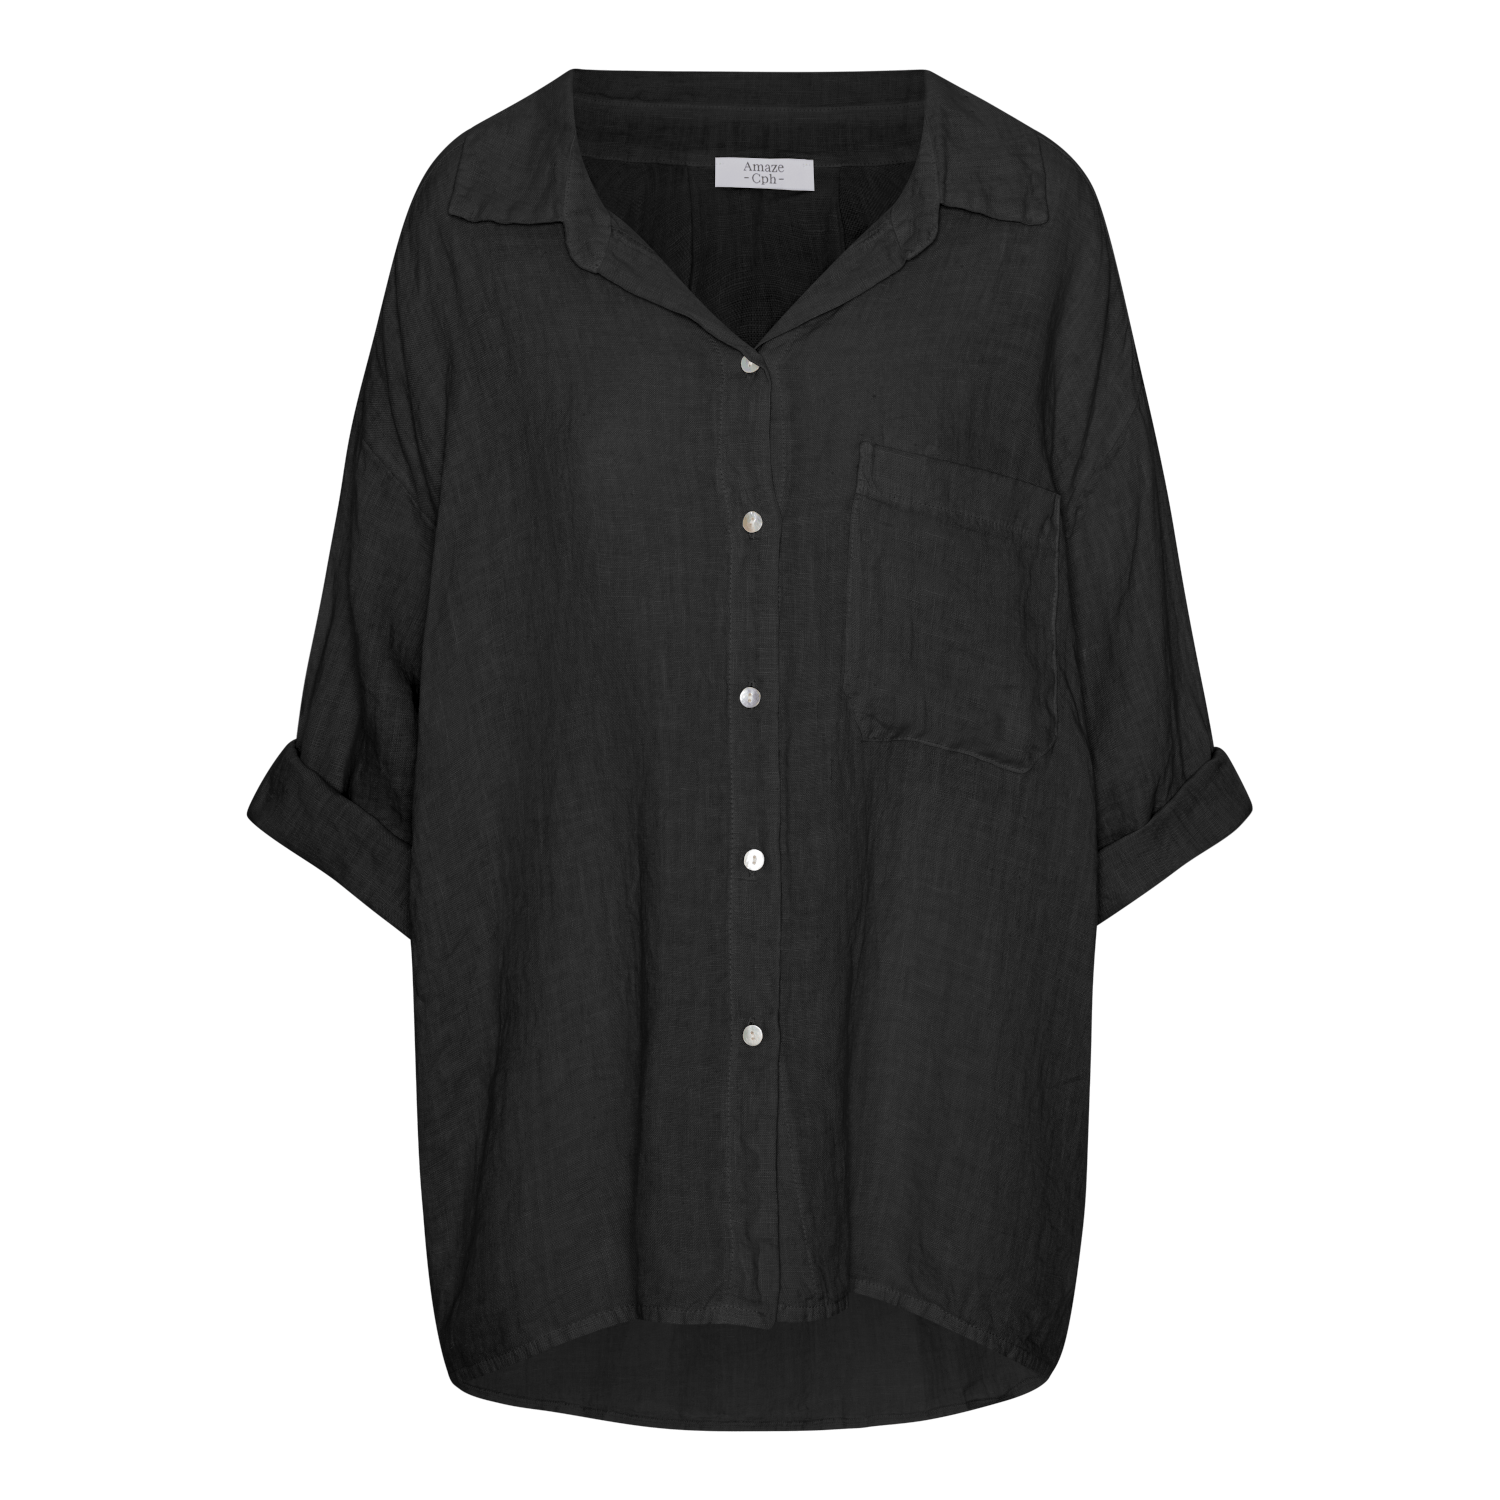 Oversized Linen Shirt - Black - Amaze Cph - Black - S/M